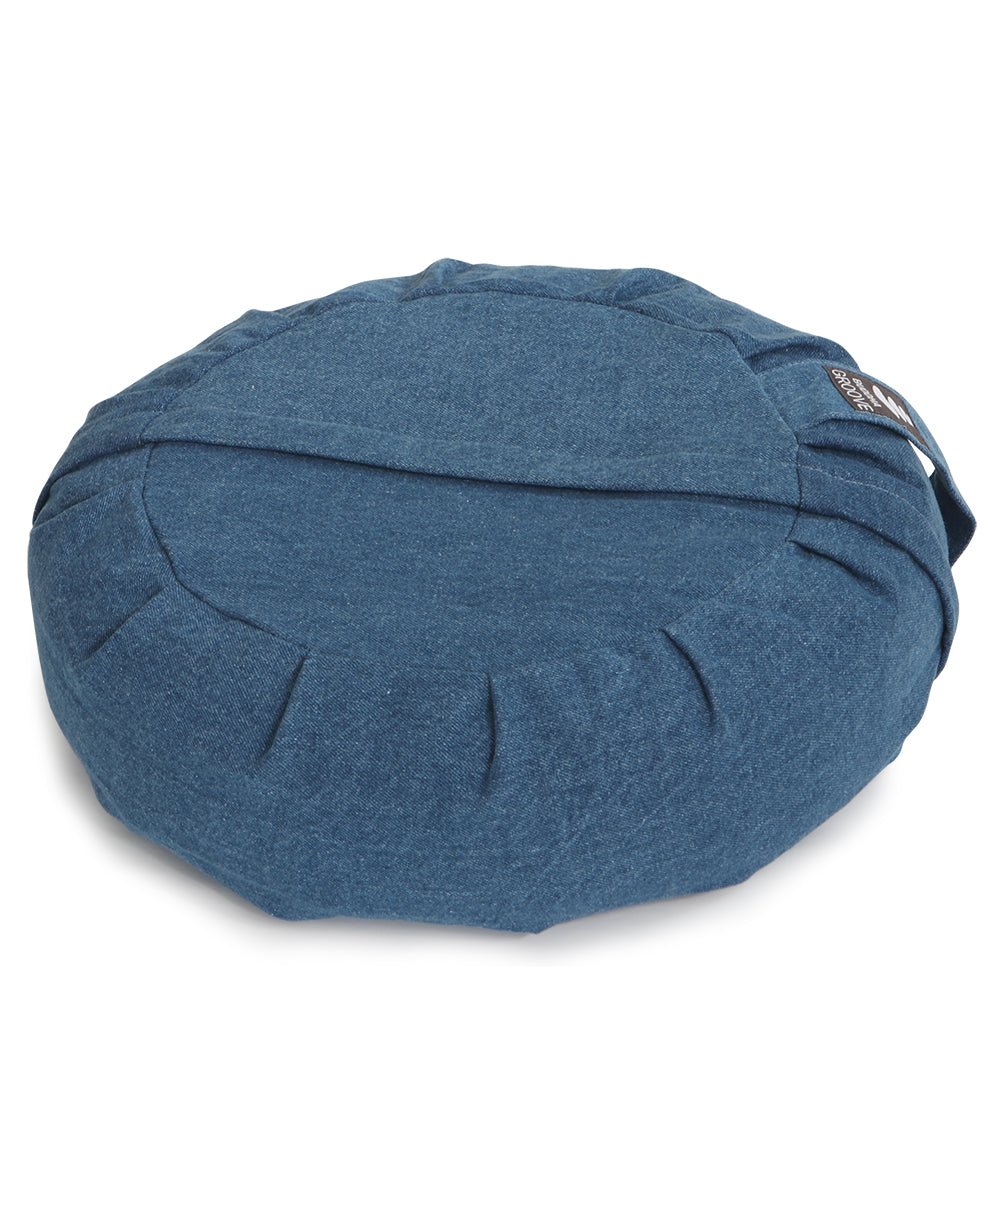 Classic Blue Denim Meditation Zafu Cushion - Massage Cushions